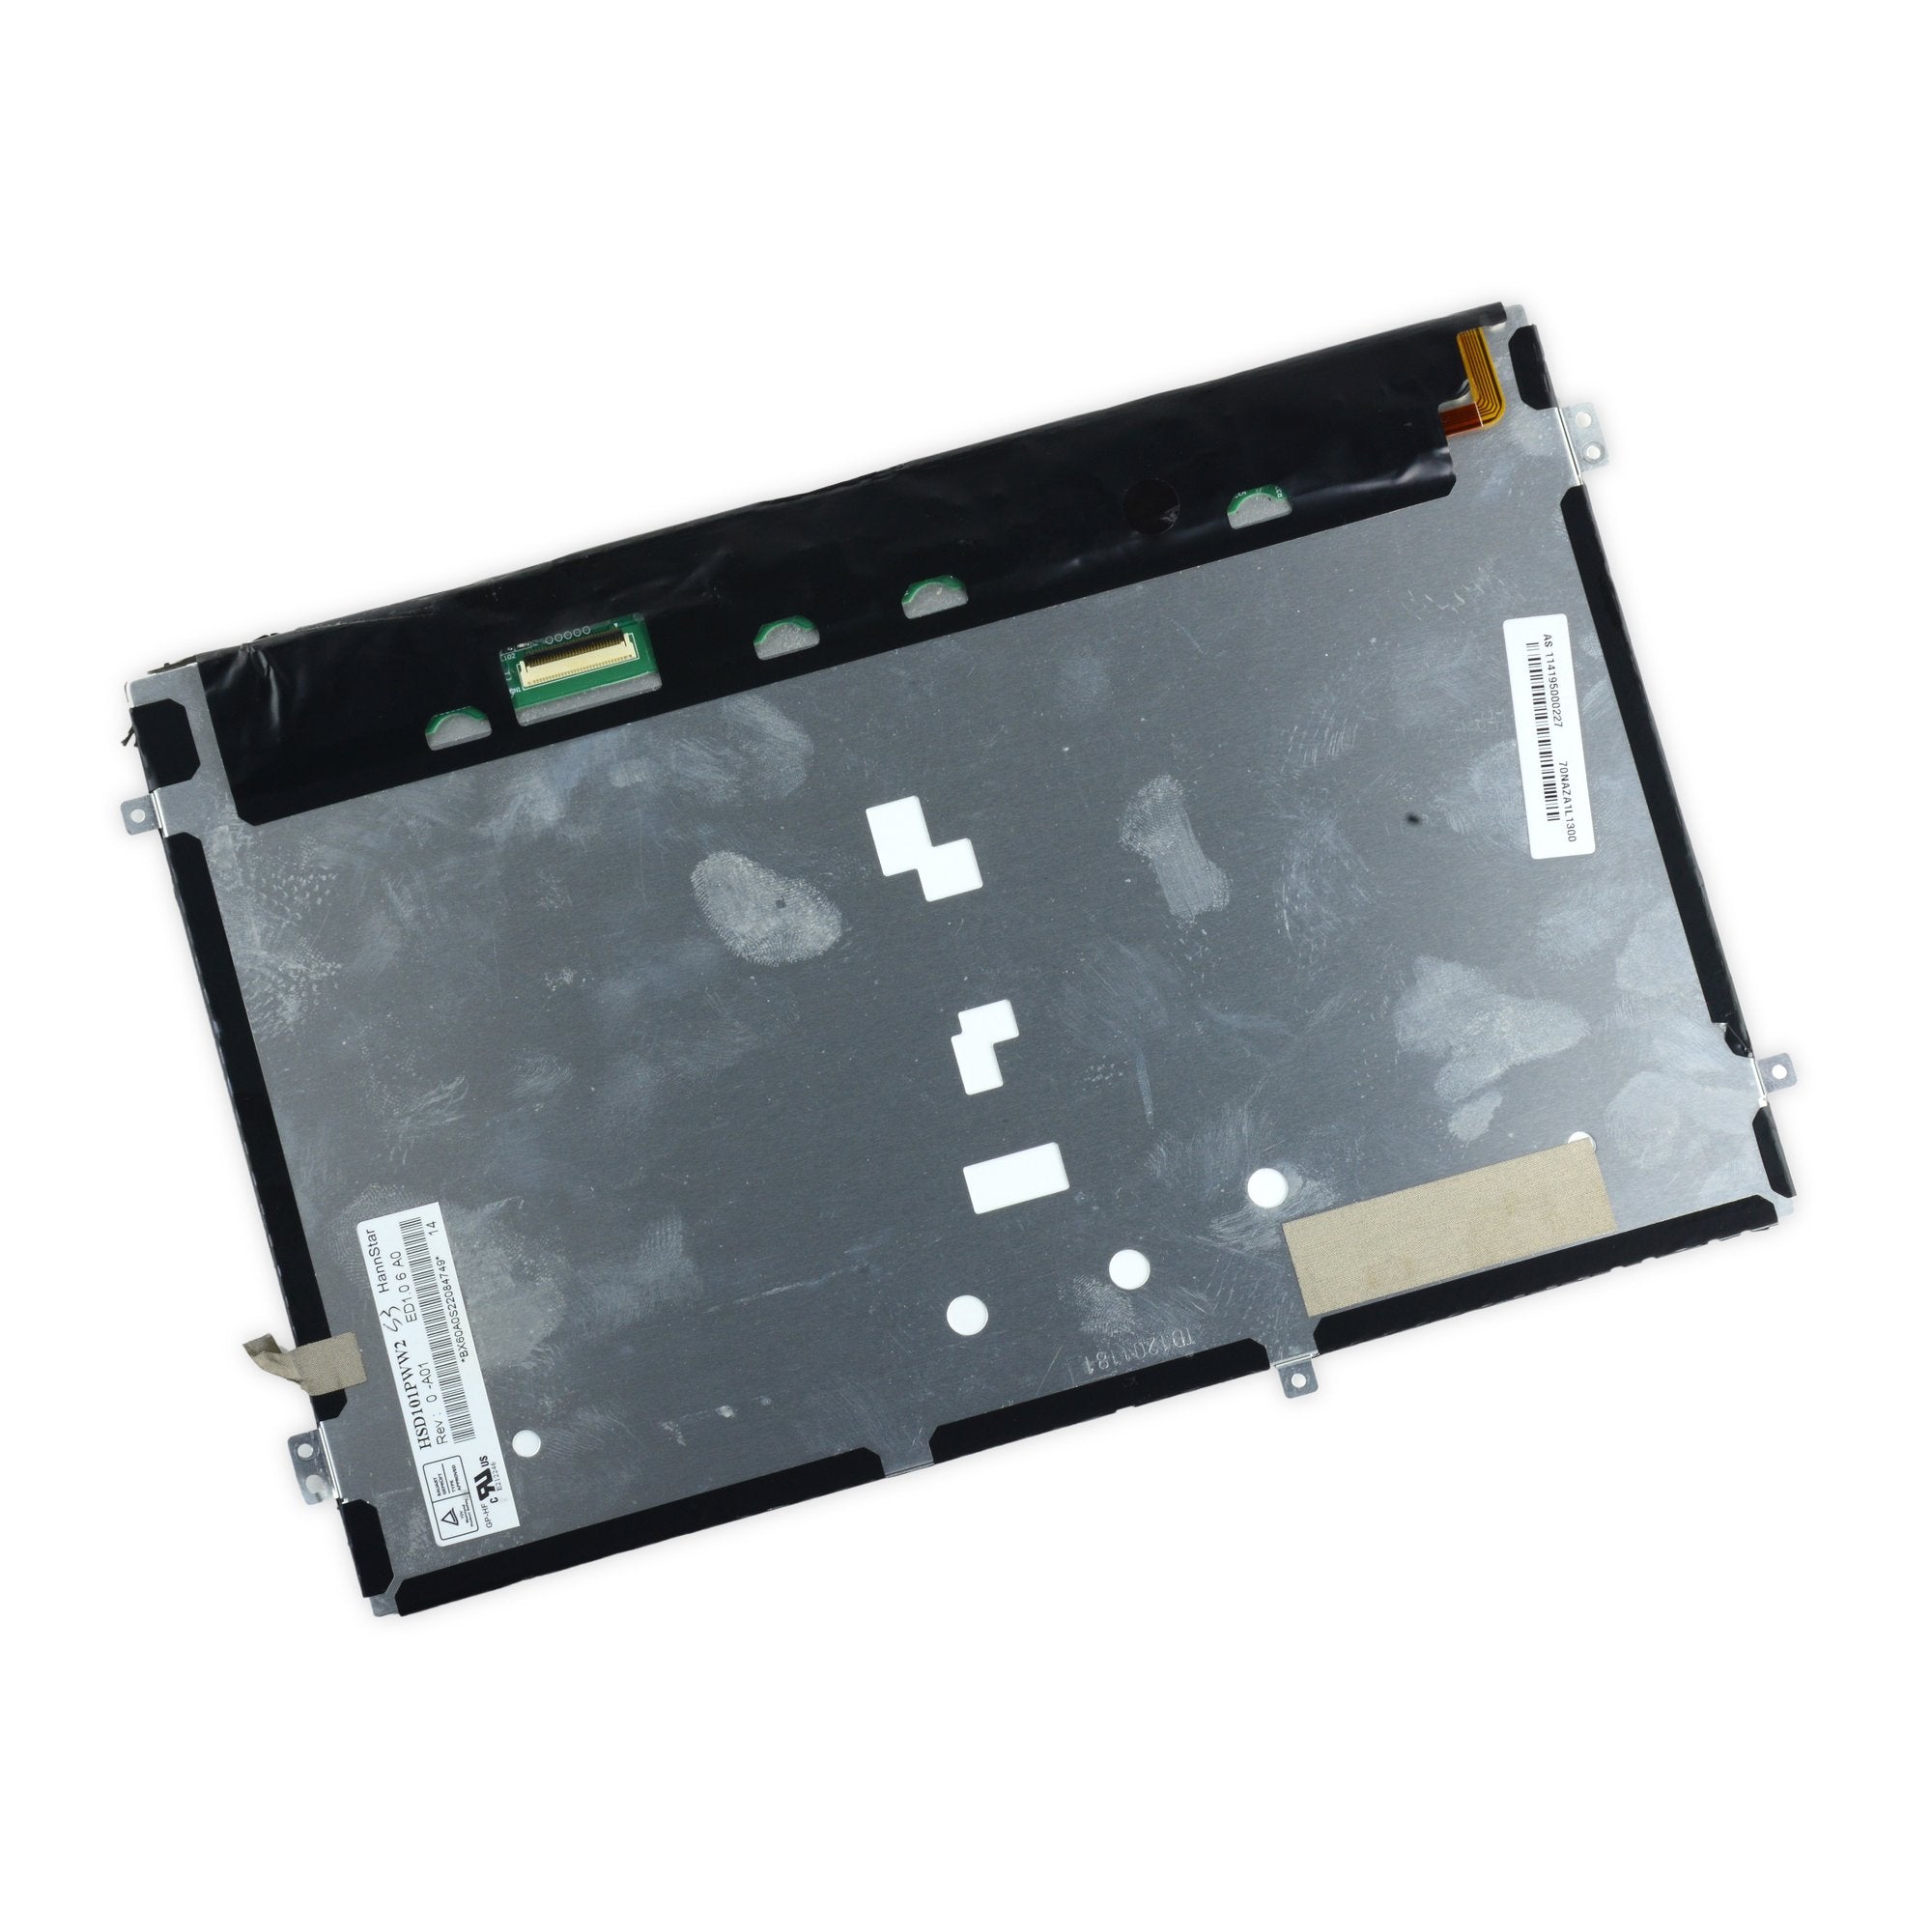 ASUS Eee Pad Transformer Prime (TF201) LCD